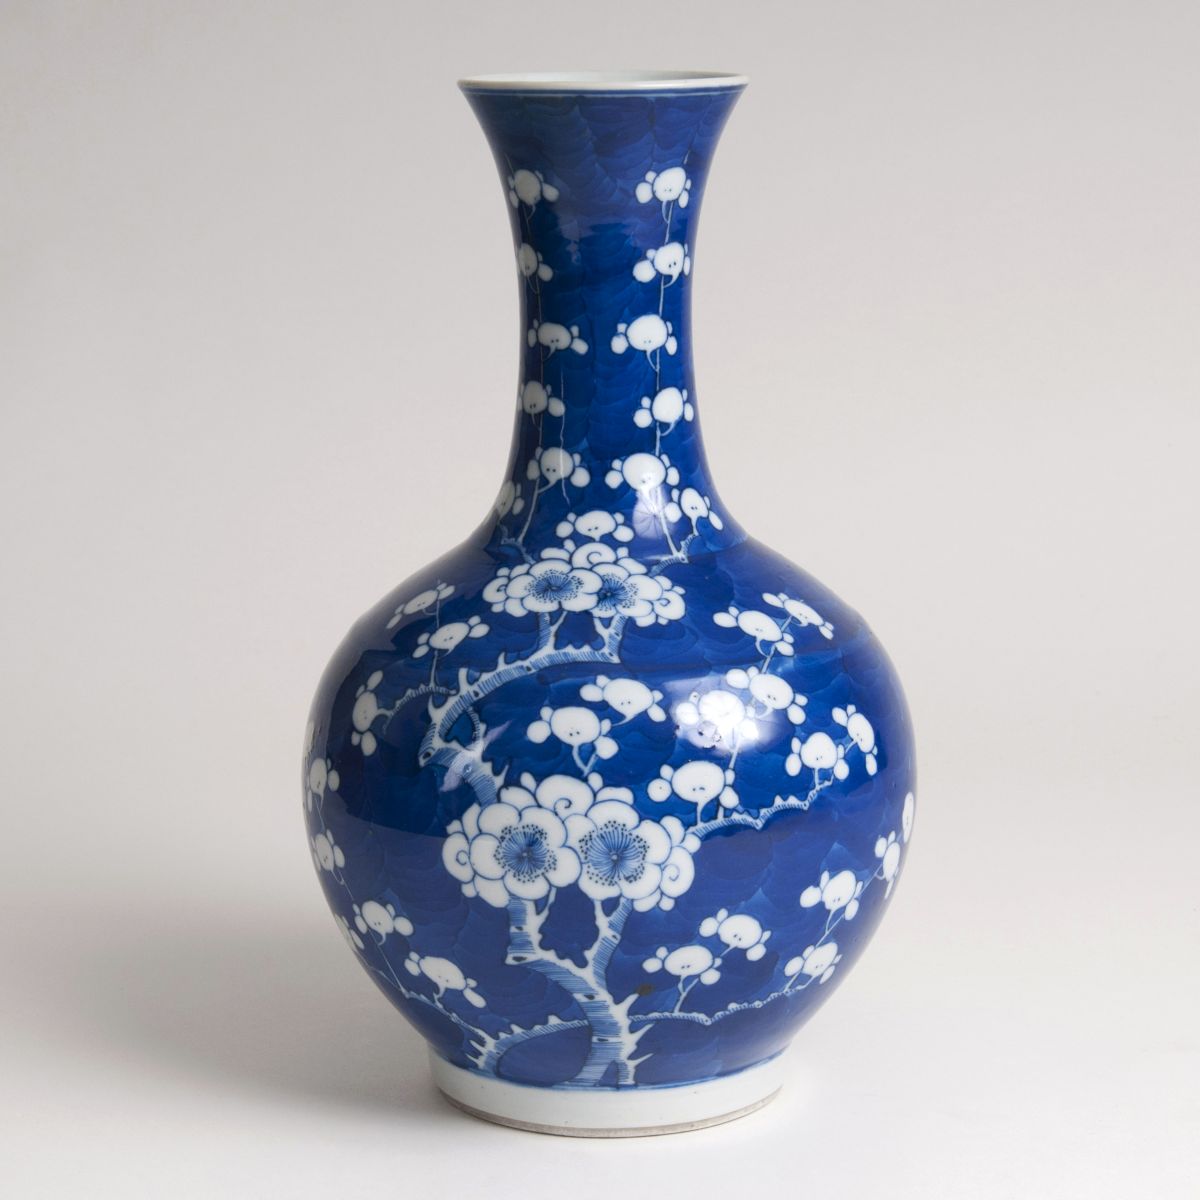 A porcelain baluster-shaped vase with prunus blossoms